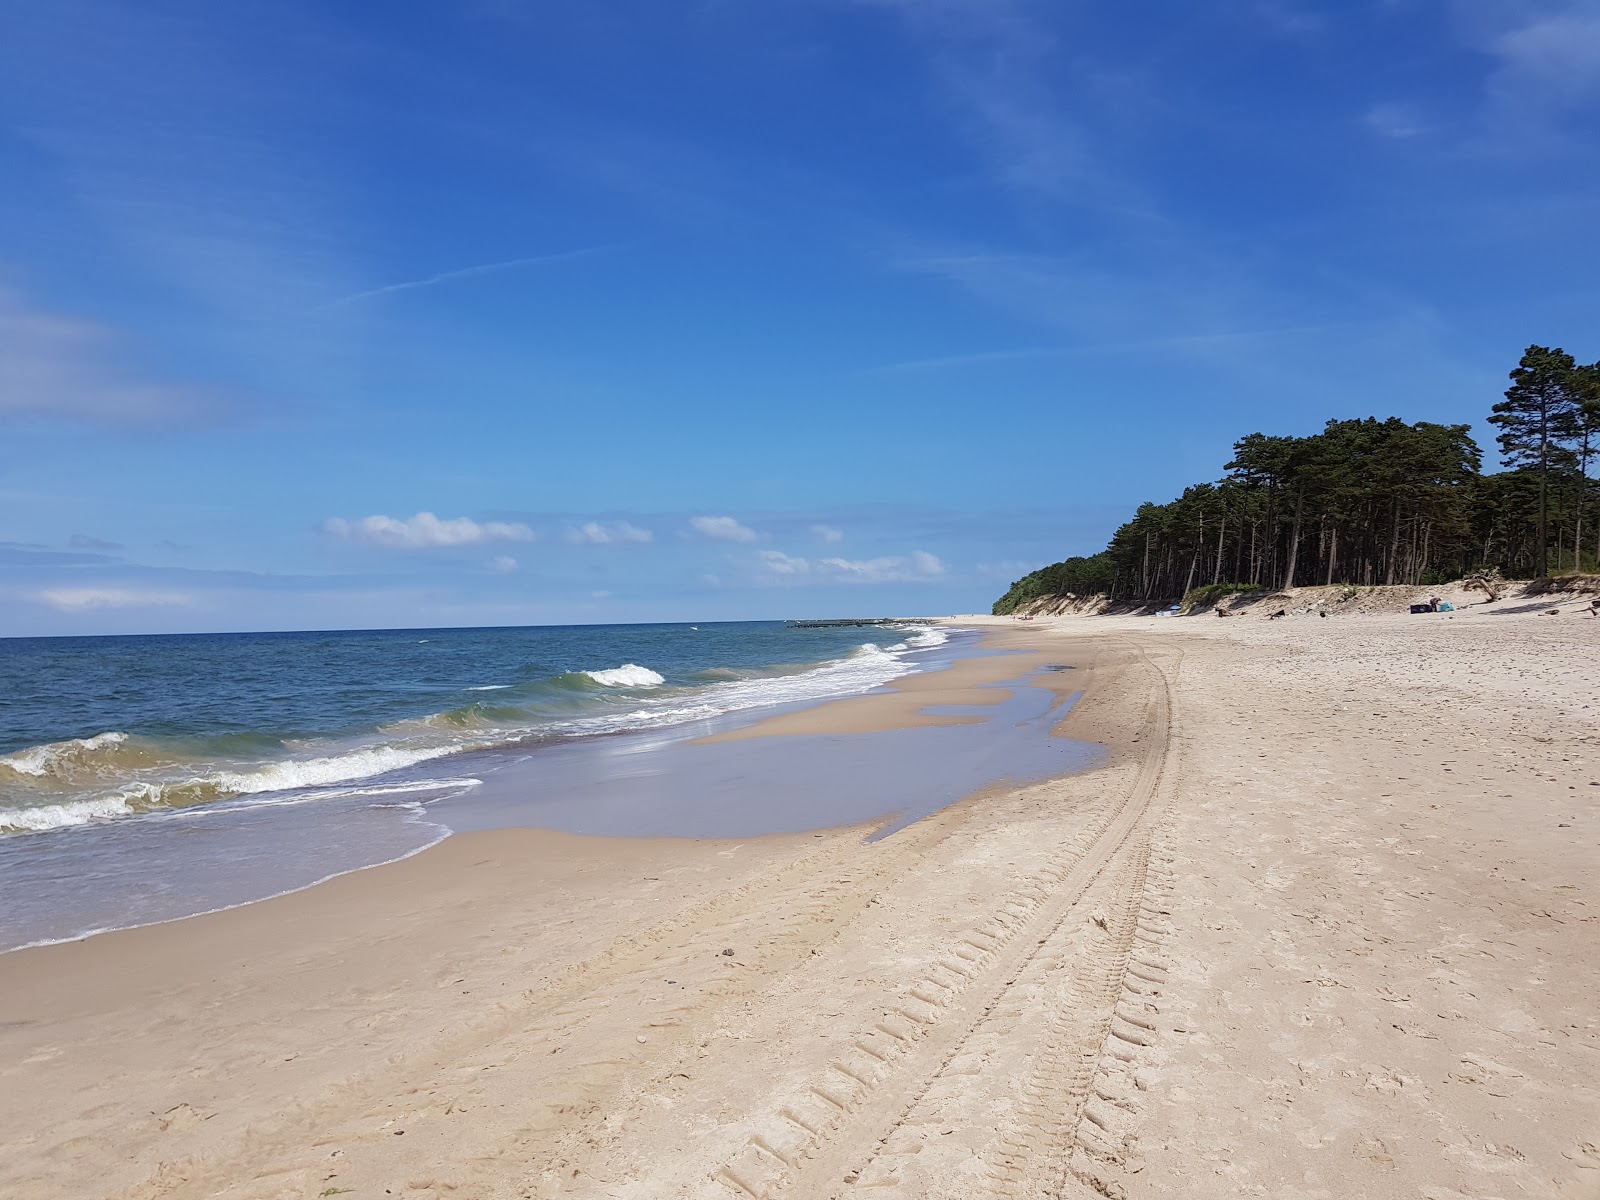 Fotografija Rusinowo beach z svetel pesek površino